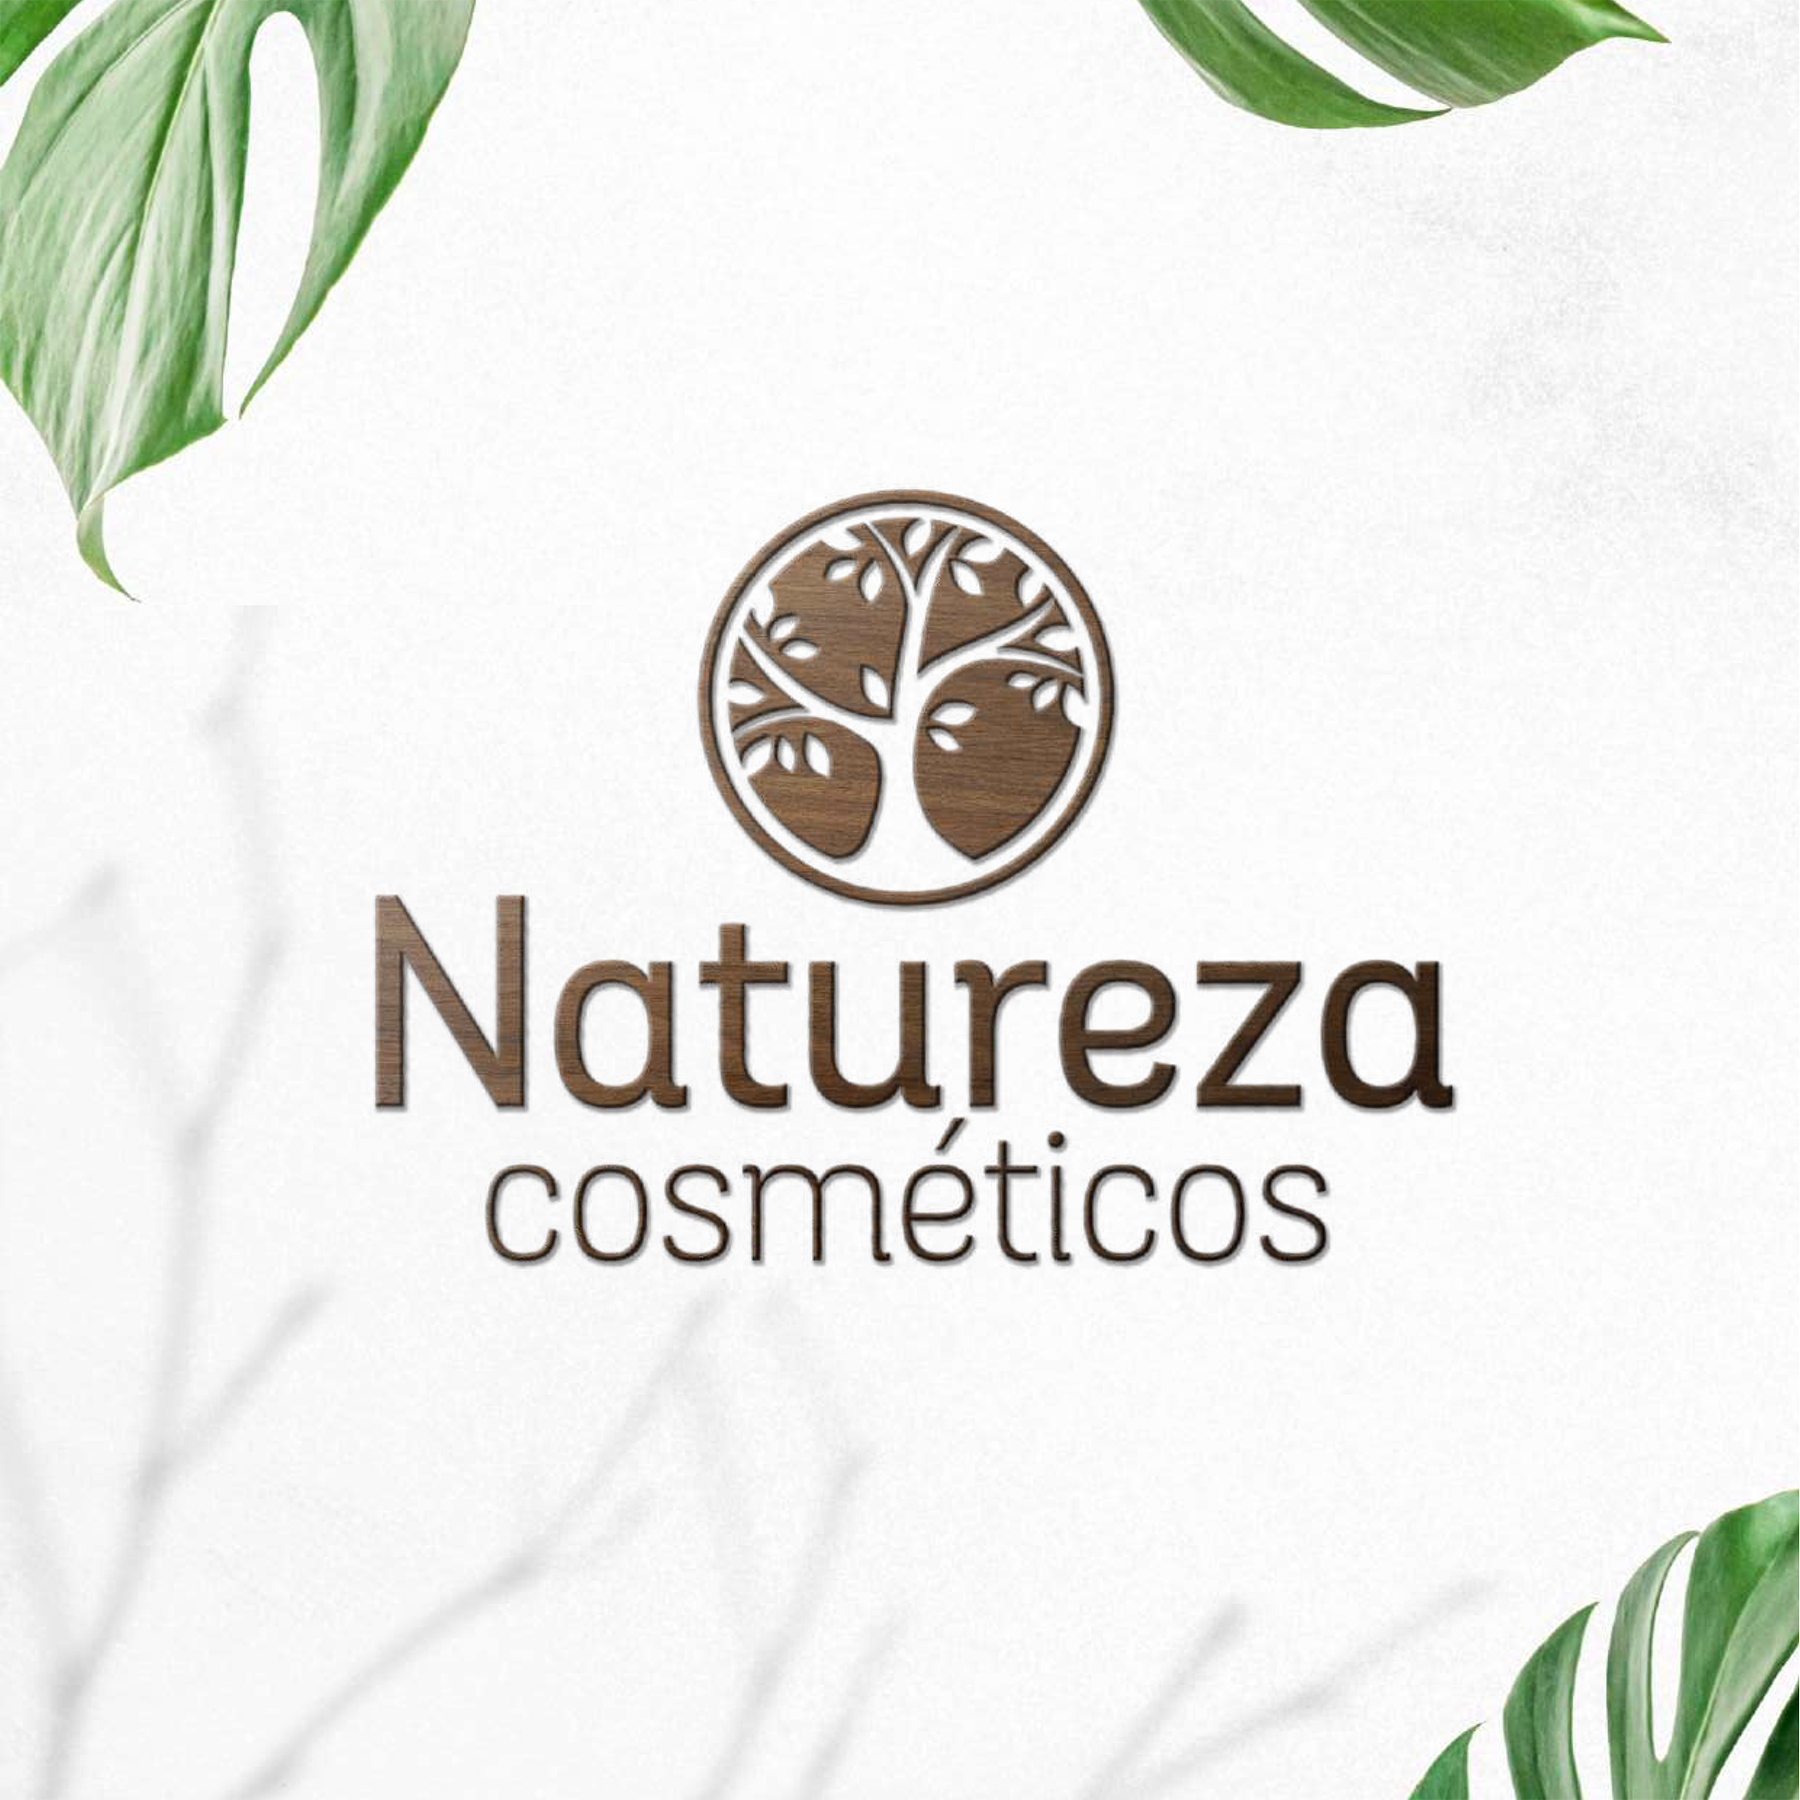 Natureza Cosmeticos Collection - Natureza USA